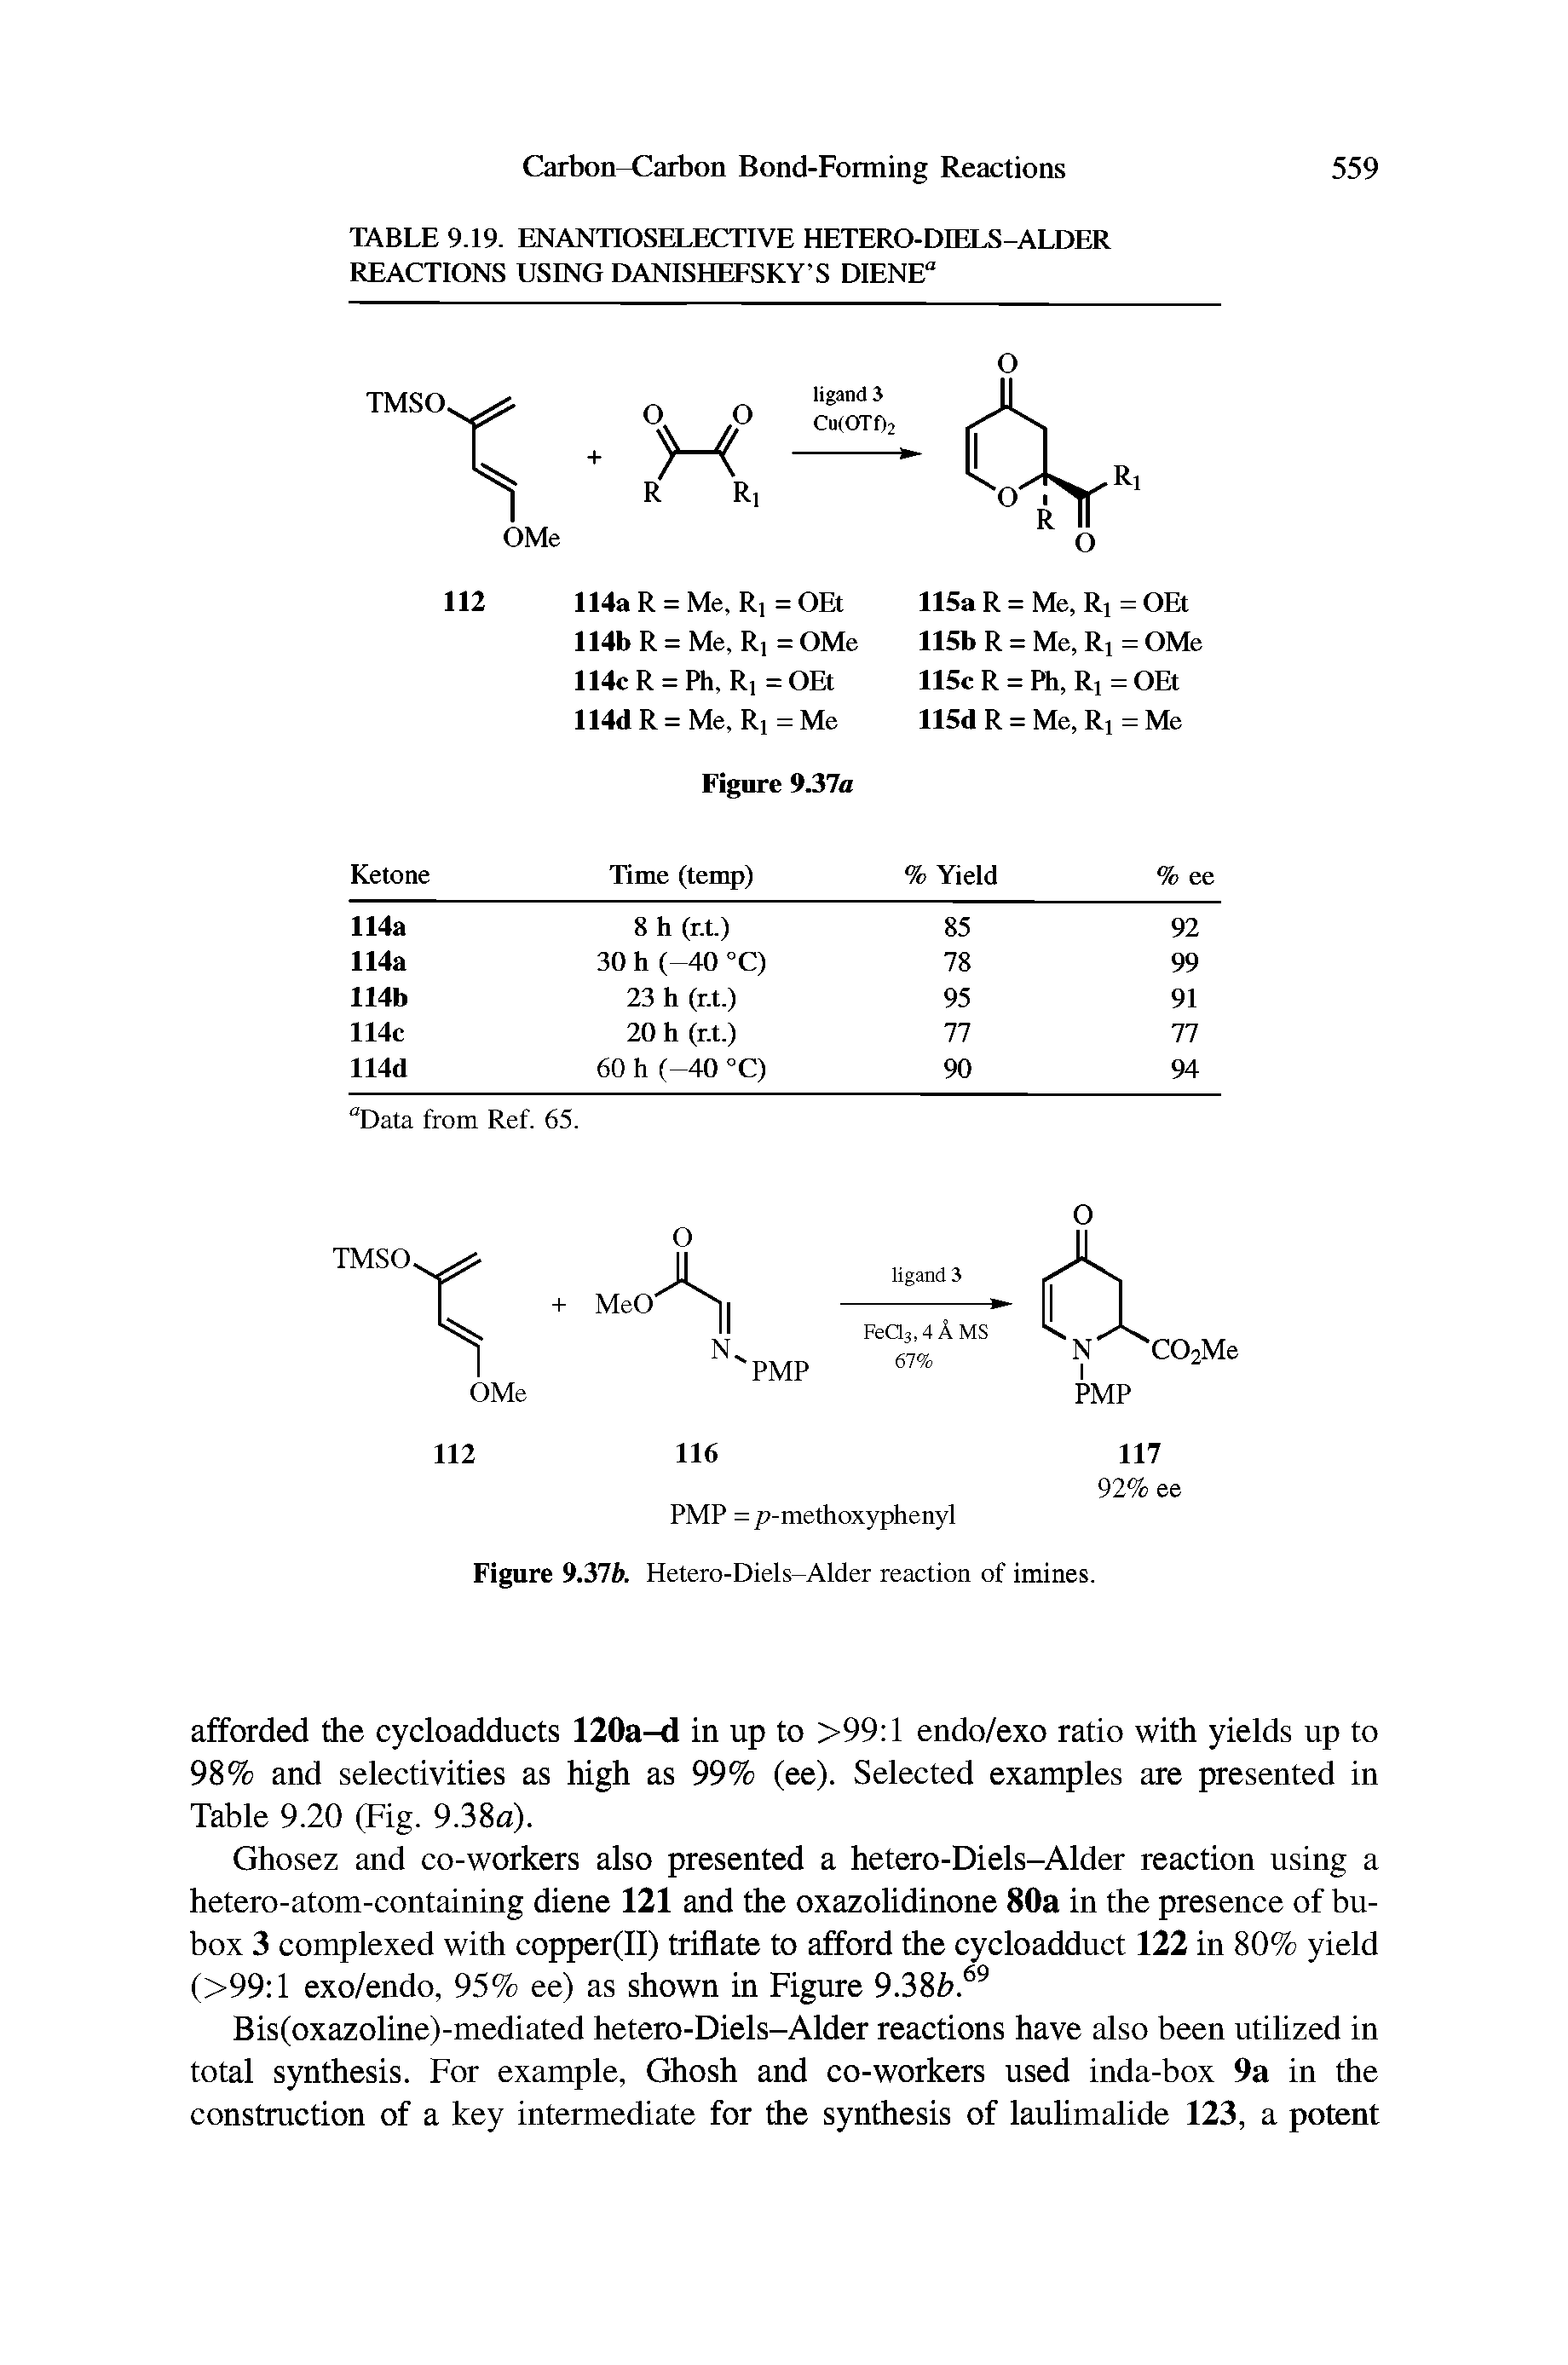 Figure 931b. Hetero-Diels-Alder reaction of imines.